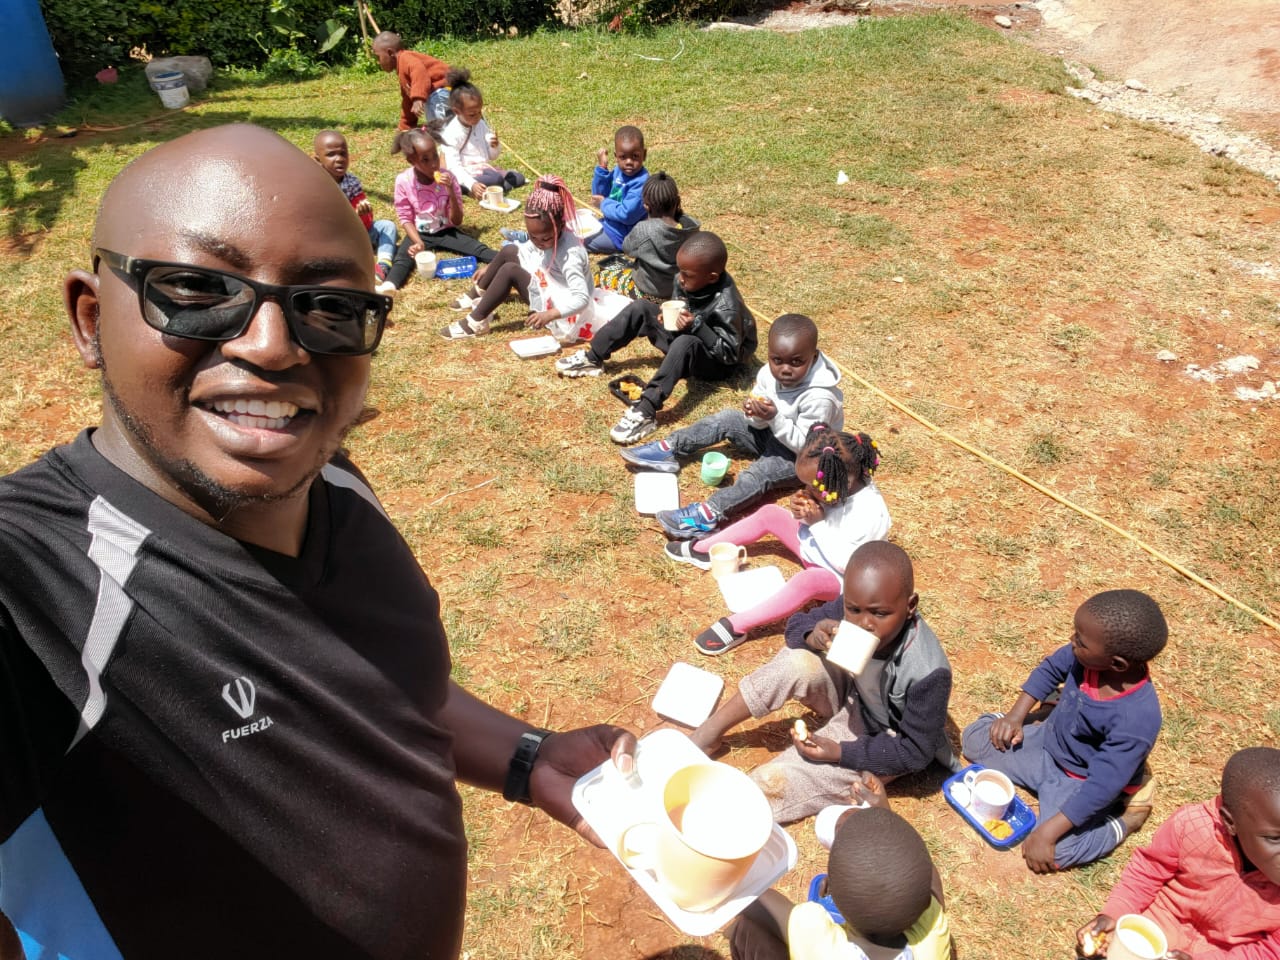 Local leader Joe with smiling children enjoying a meal under the bright Kenyan sun, part of RDM.life's community nourishment program.